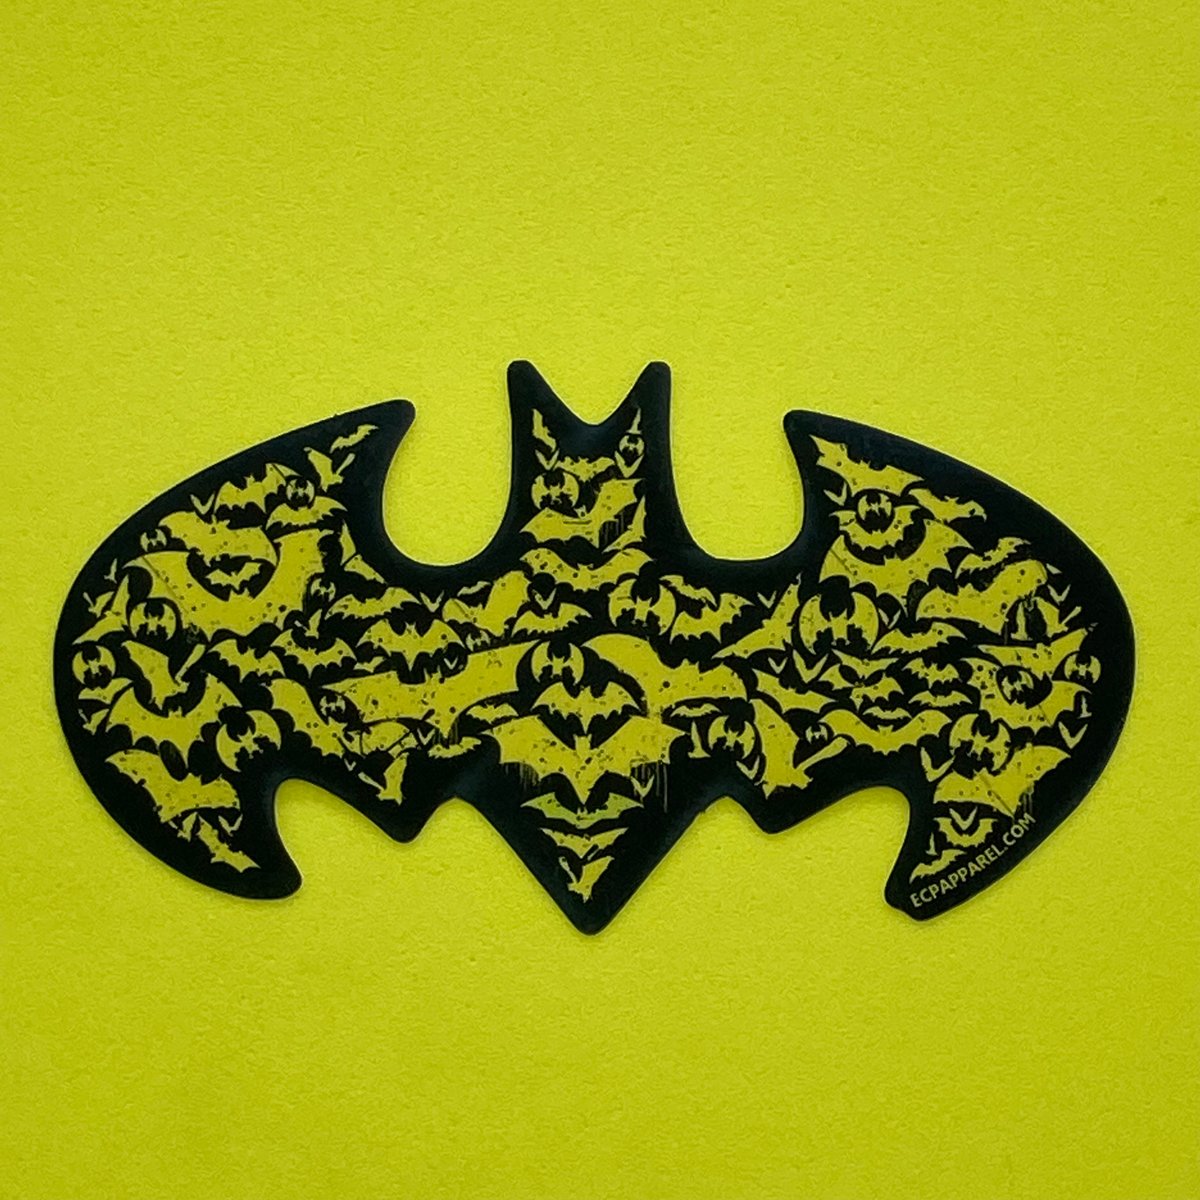 “Bats, man!” Die-cut Sticker